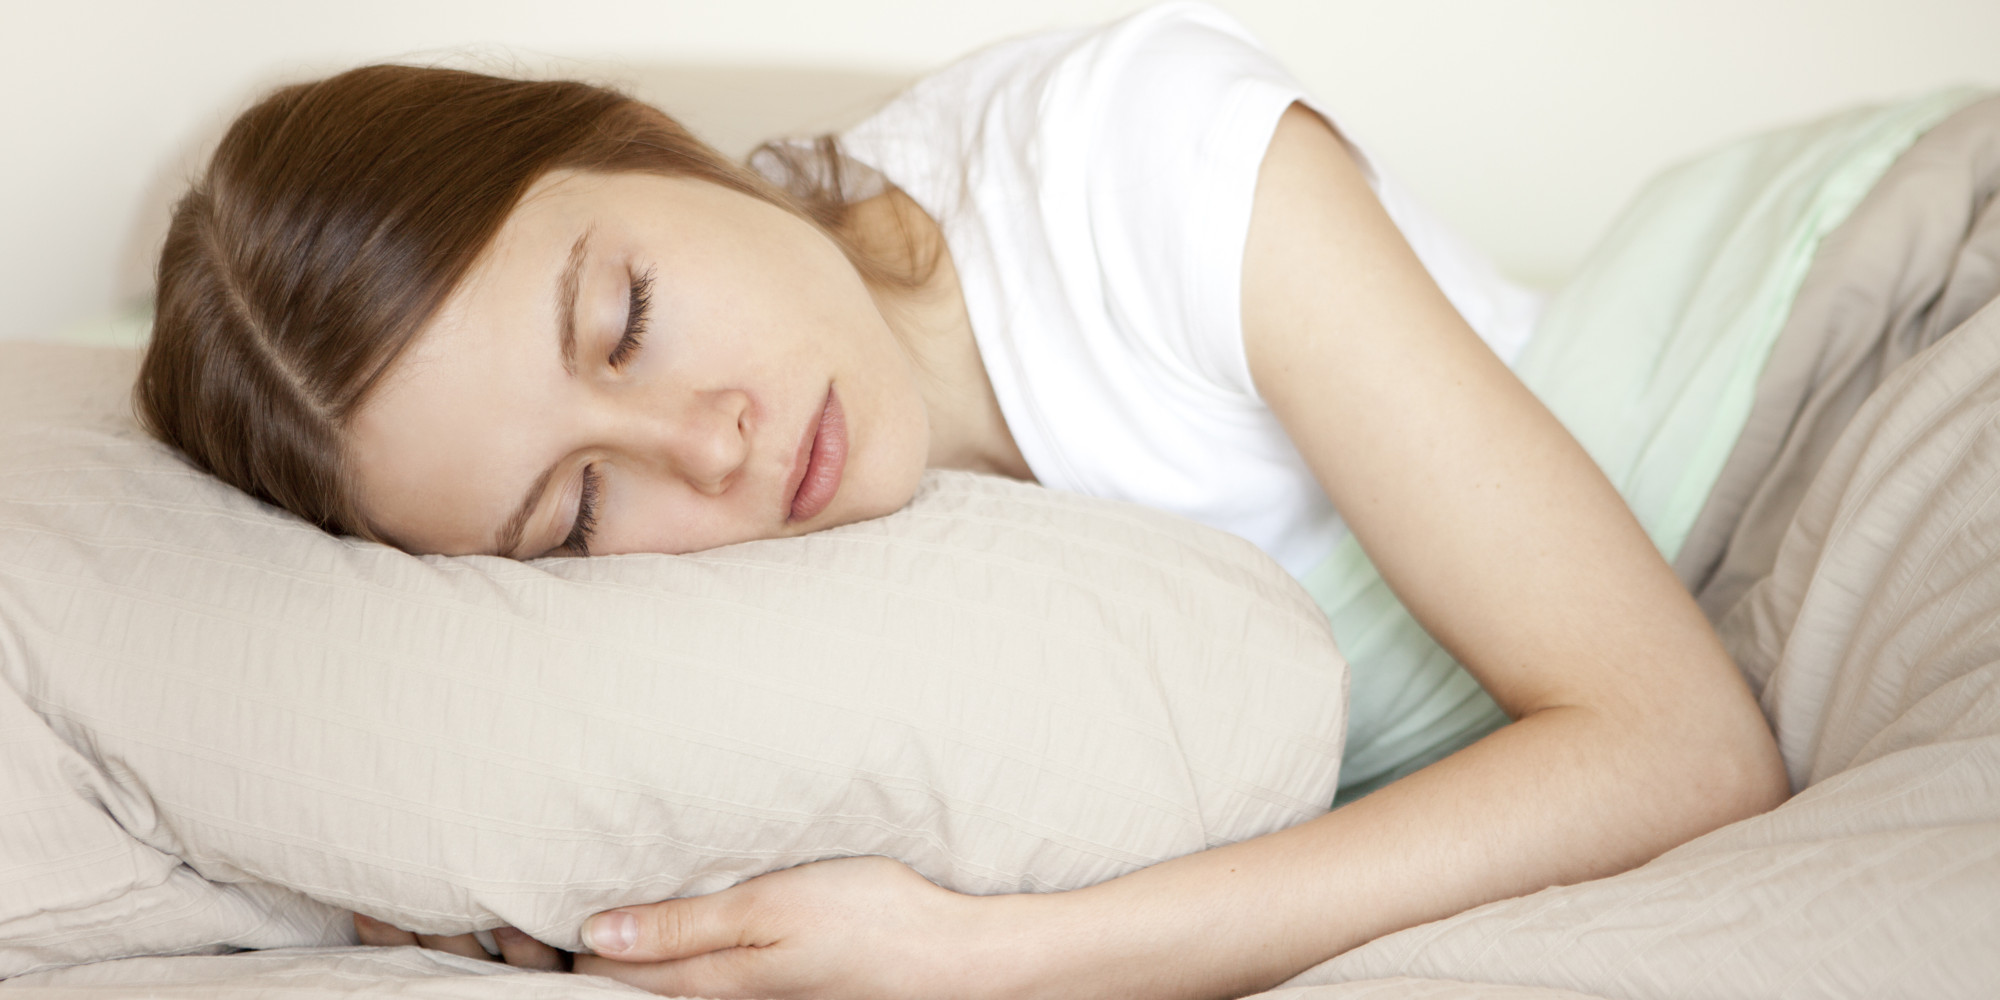 Women Need More Sleep Because Their Brains Work Harder